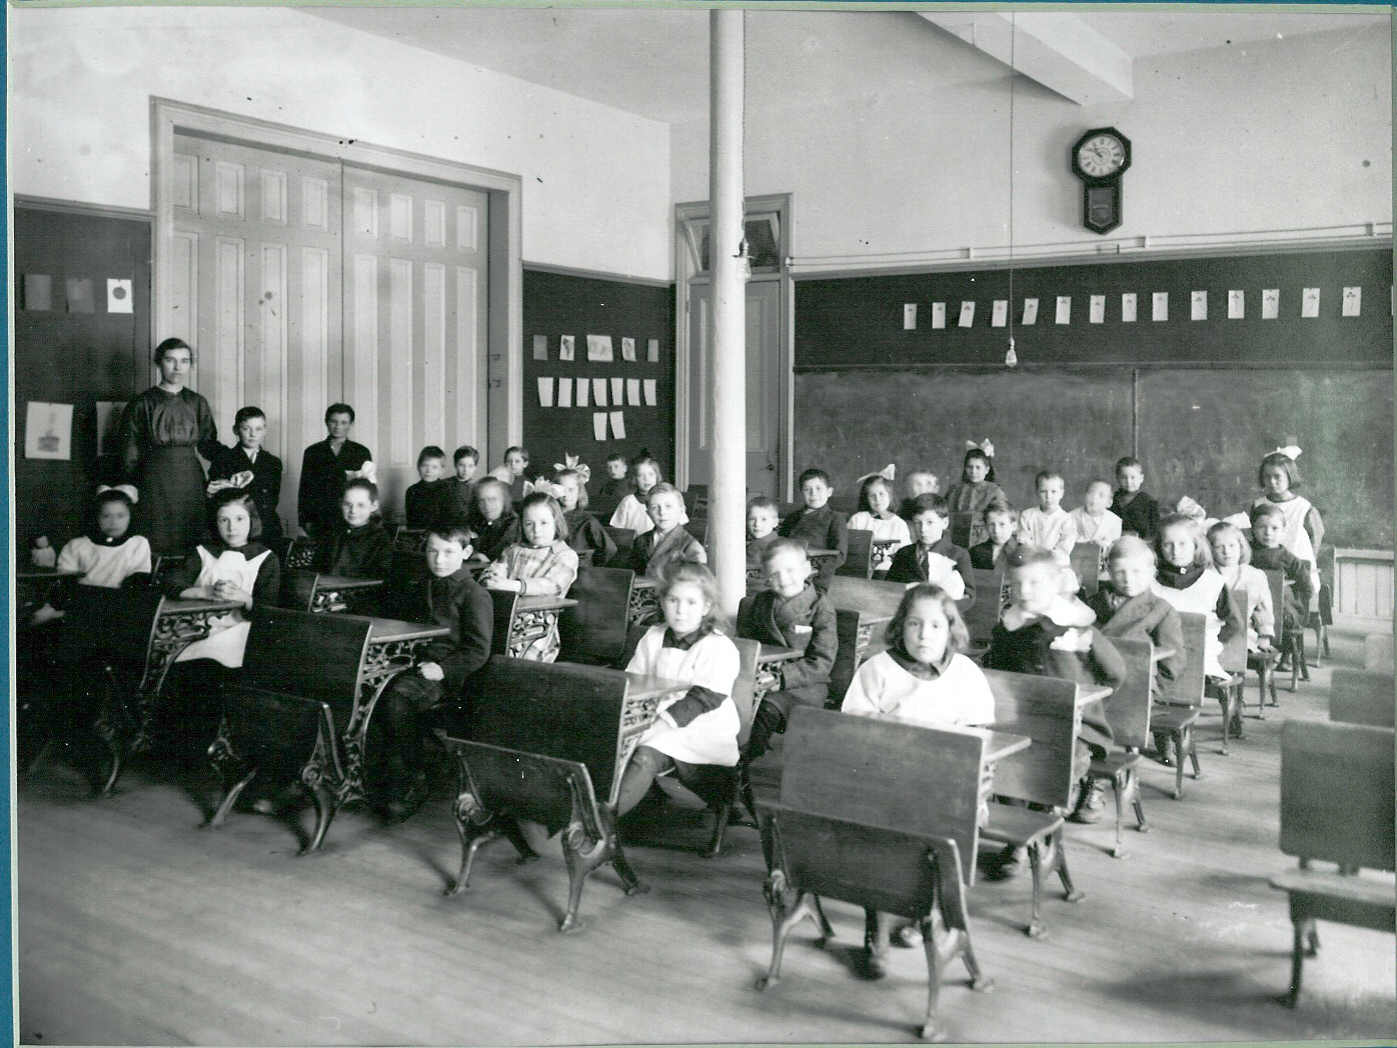 Children's Village students in classroom circa 1918